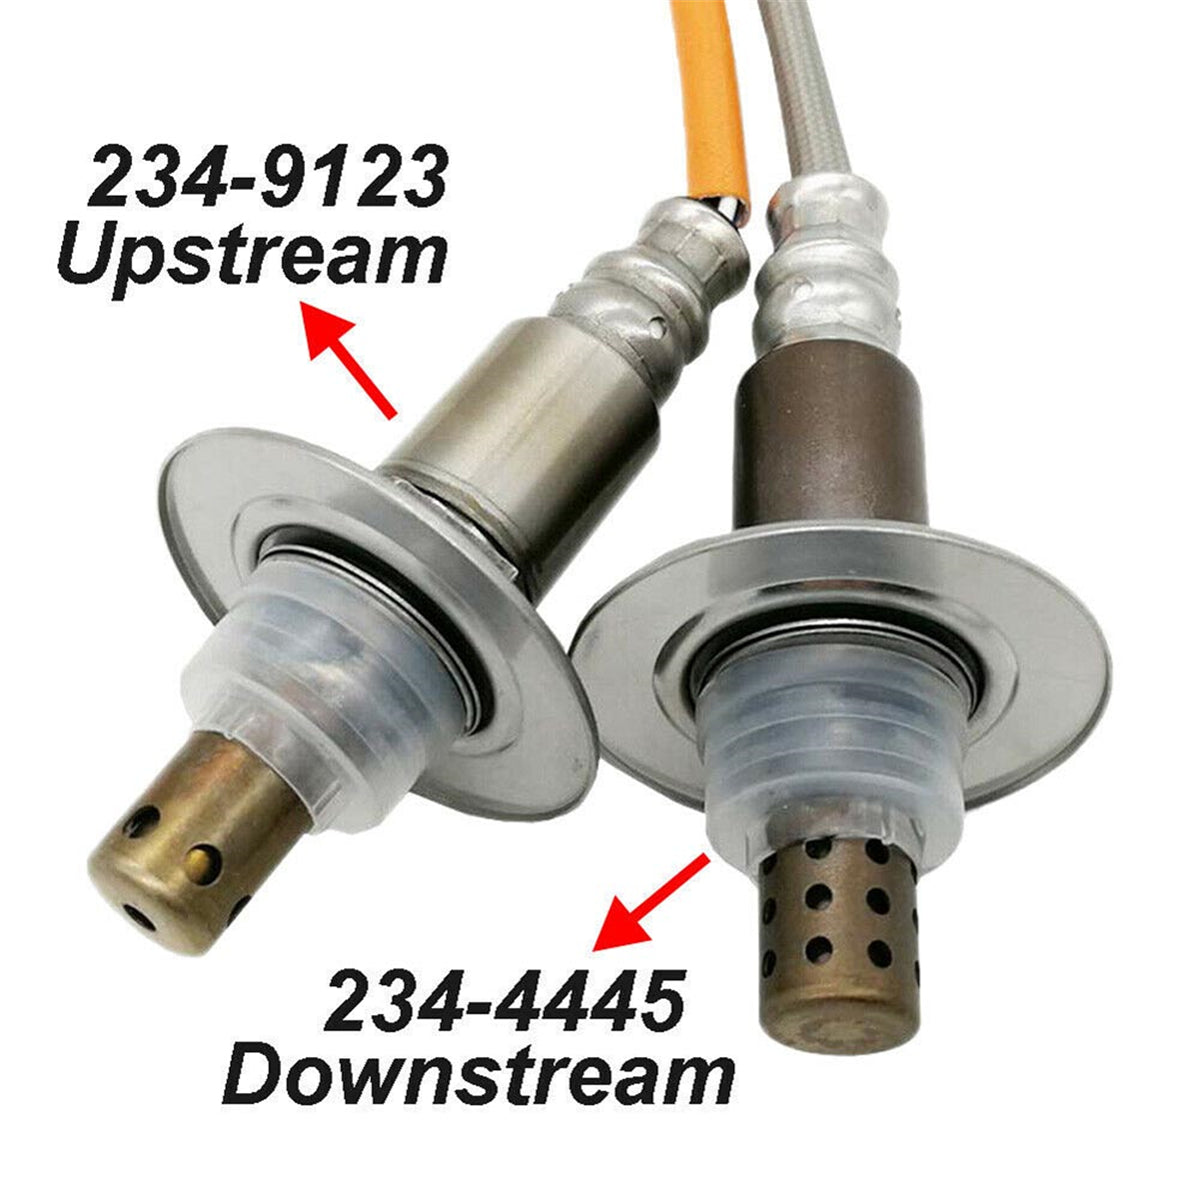 Upstream & Downstream Oxygen Sensor 234-9123 234-4445, Upstream & Oxygen Sensor for 2006-2011 Subaru, Daysyore Oxygen Sensor, Car Oxygen Sensor